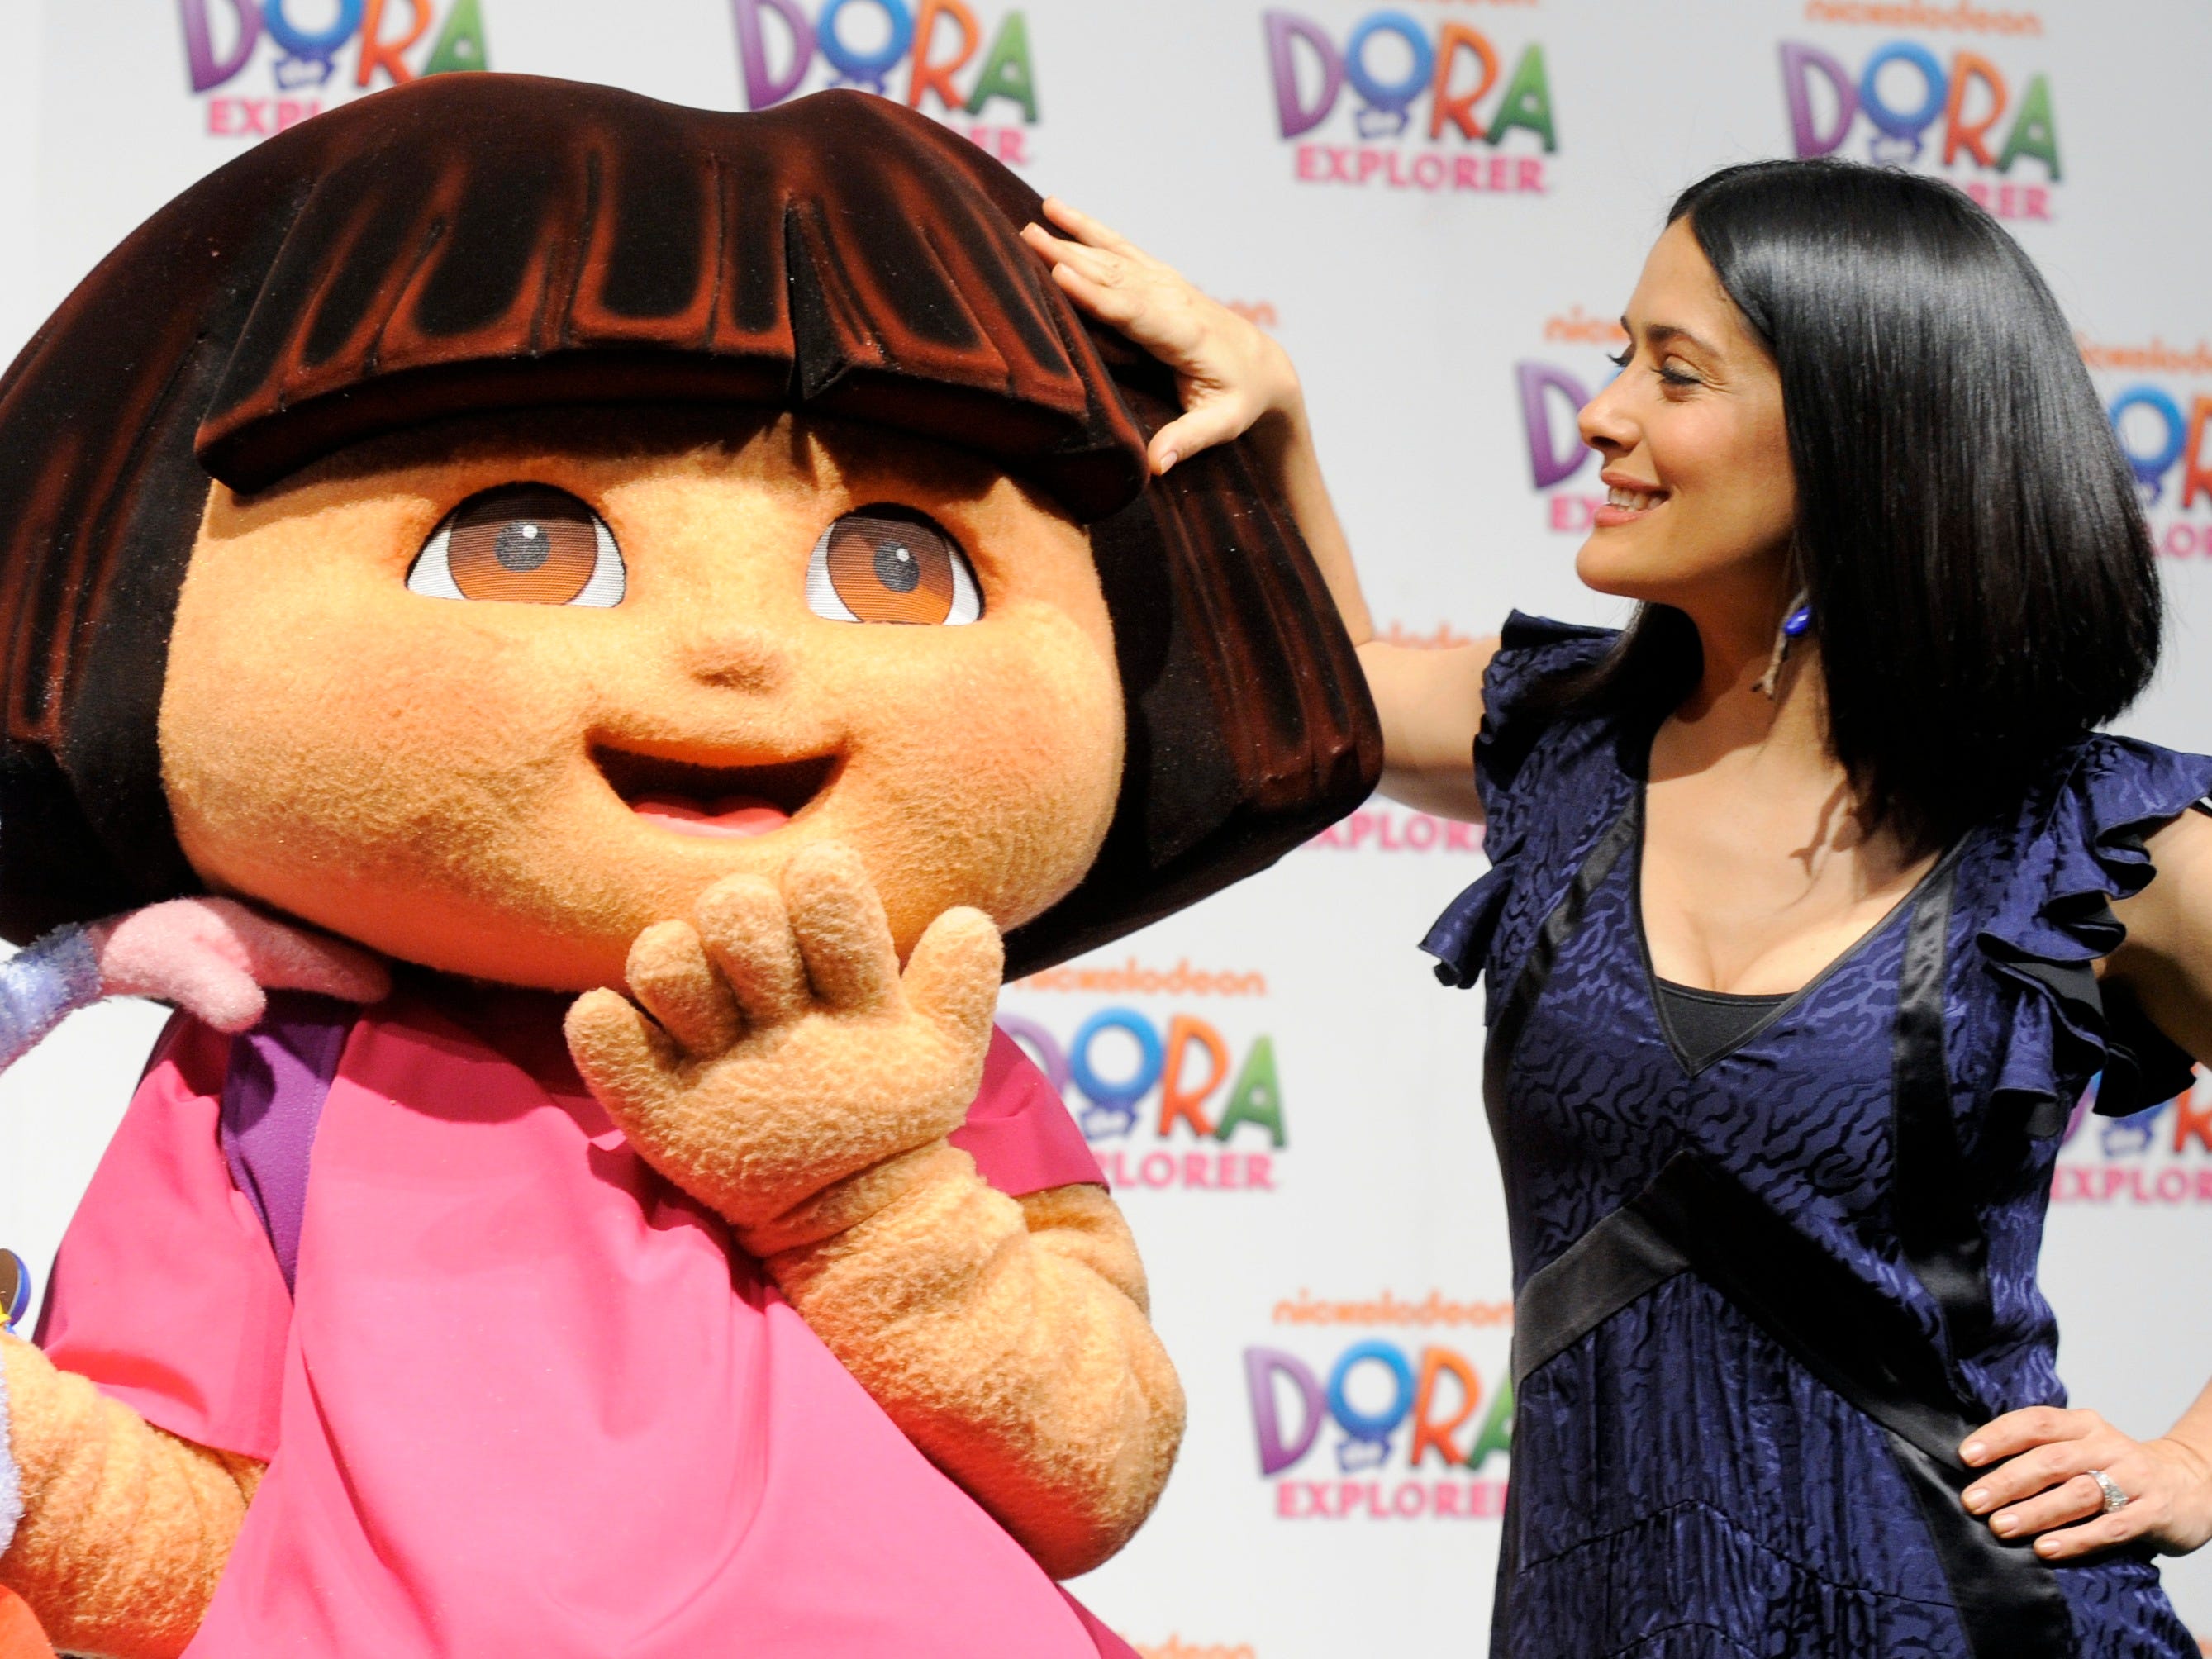 cherry cuizon recommends Pictures Of Dora The Explorer